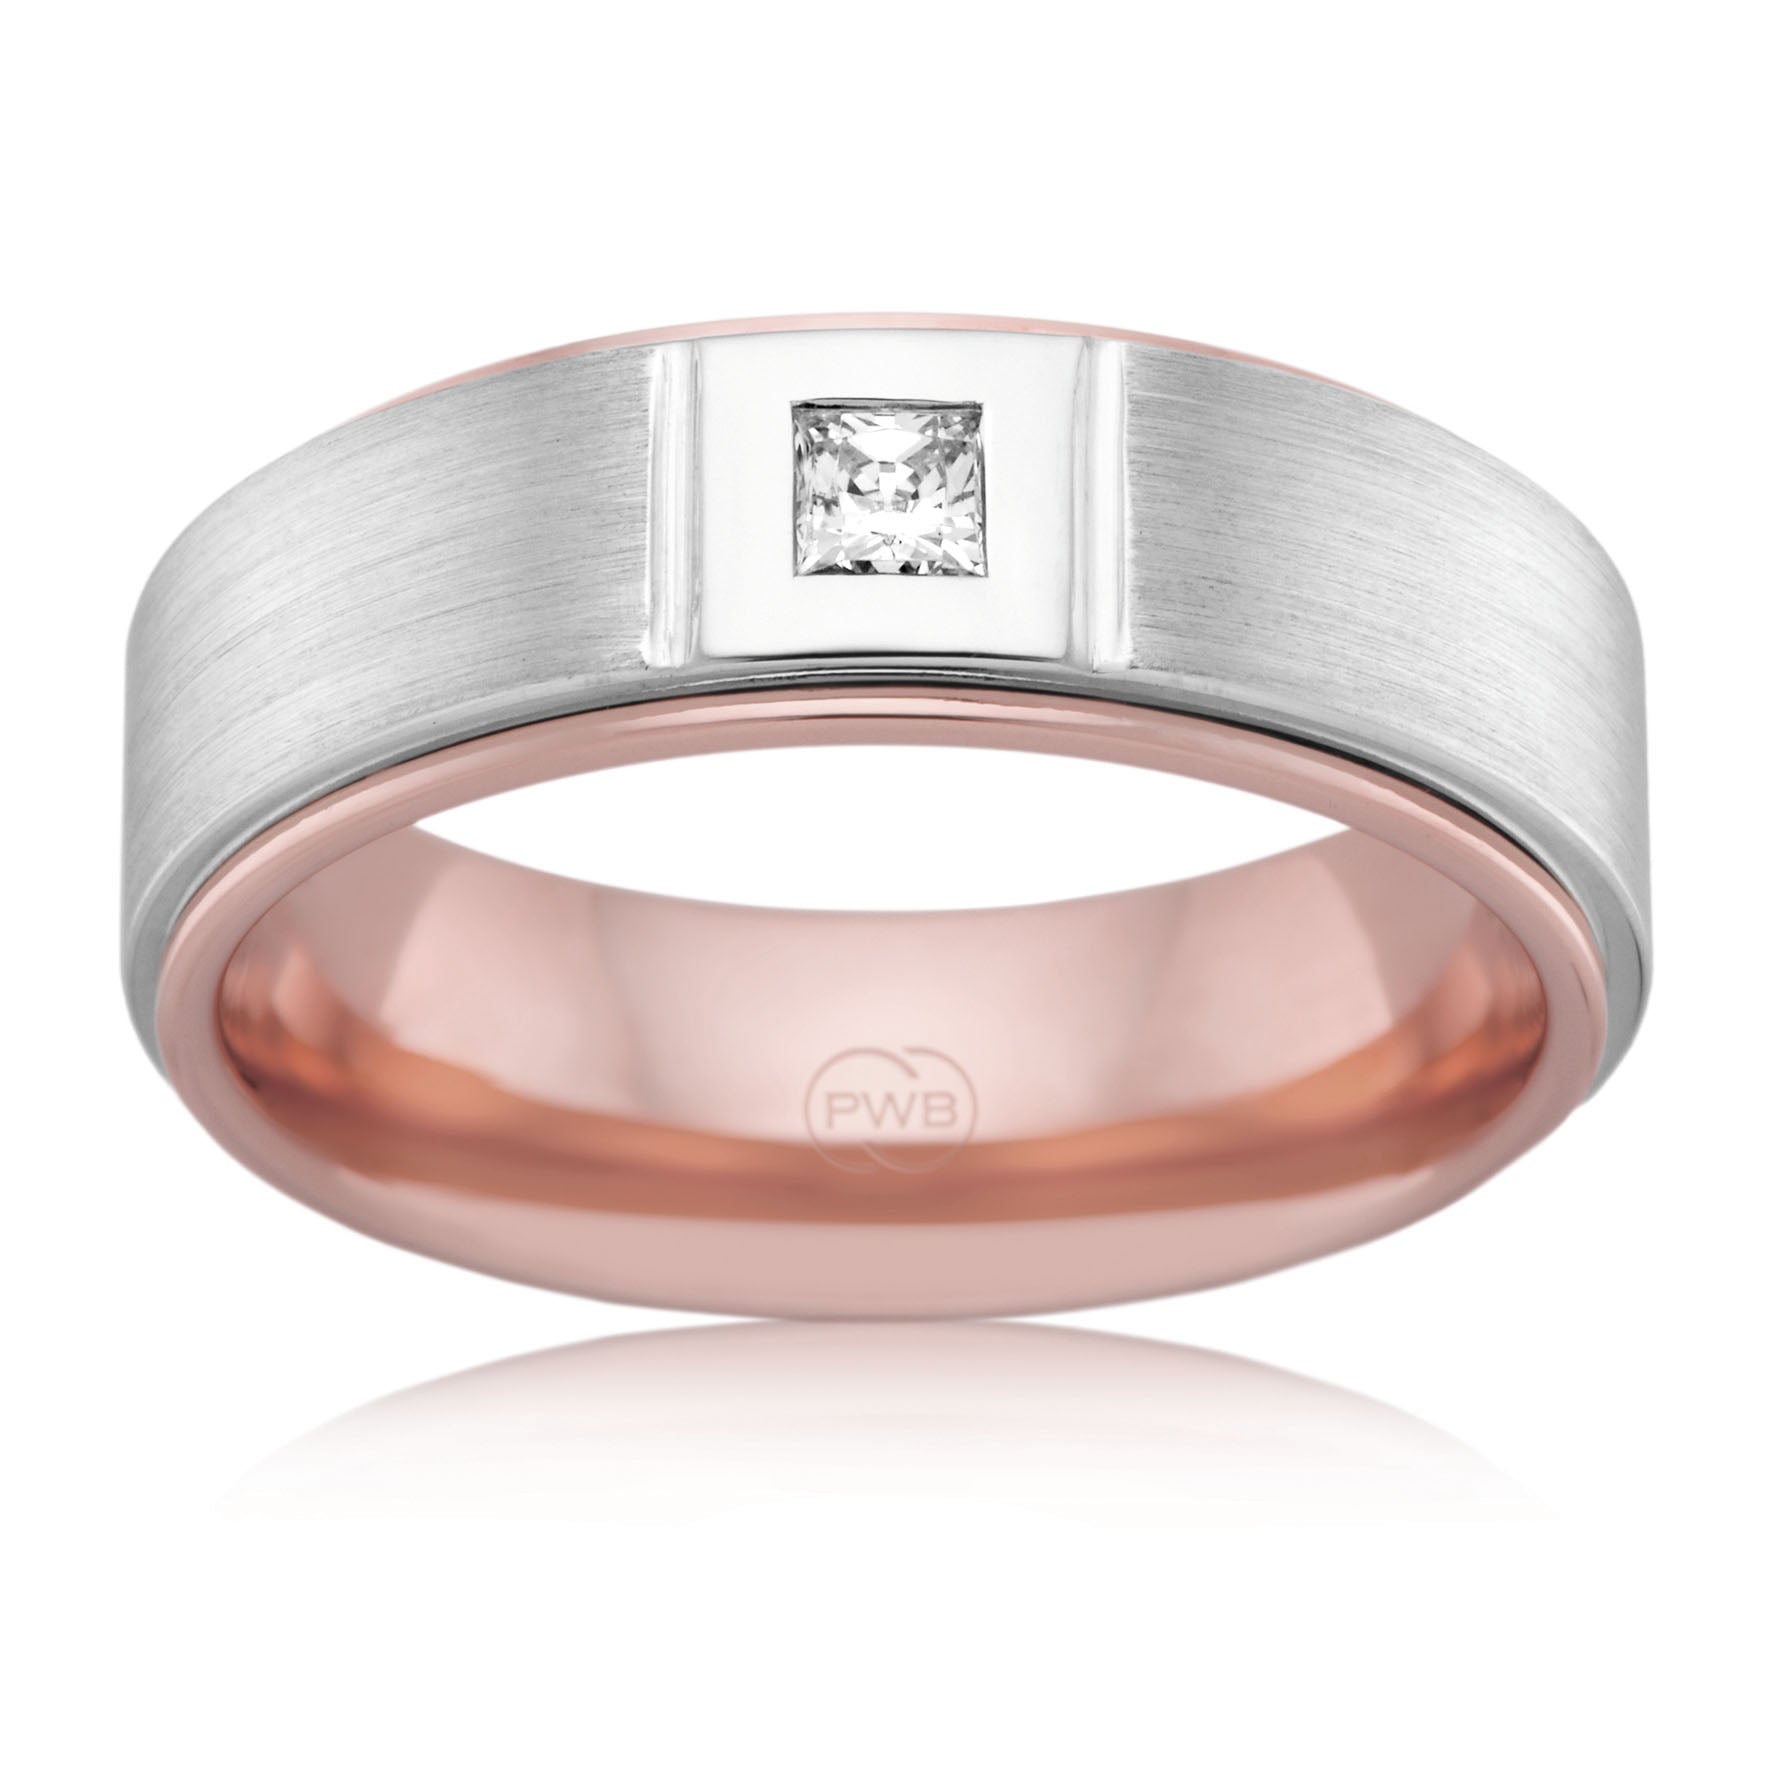 Two-tone Gents Wedding Ring with 0.15 carat Princess-cut Diamond.